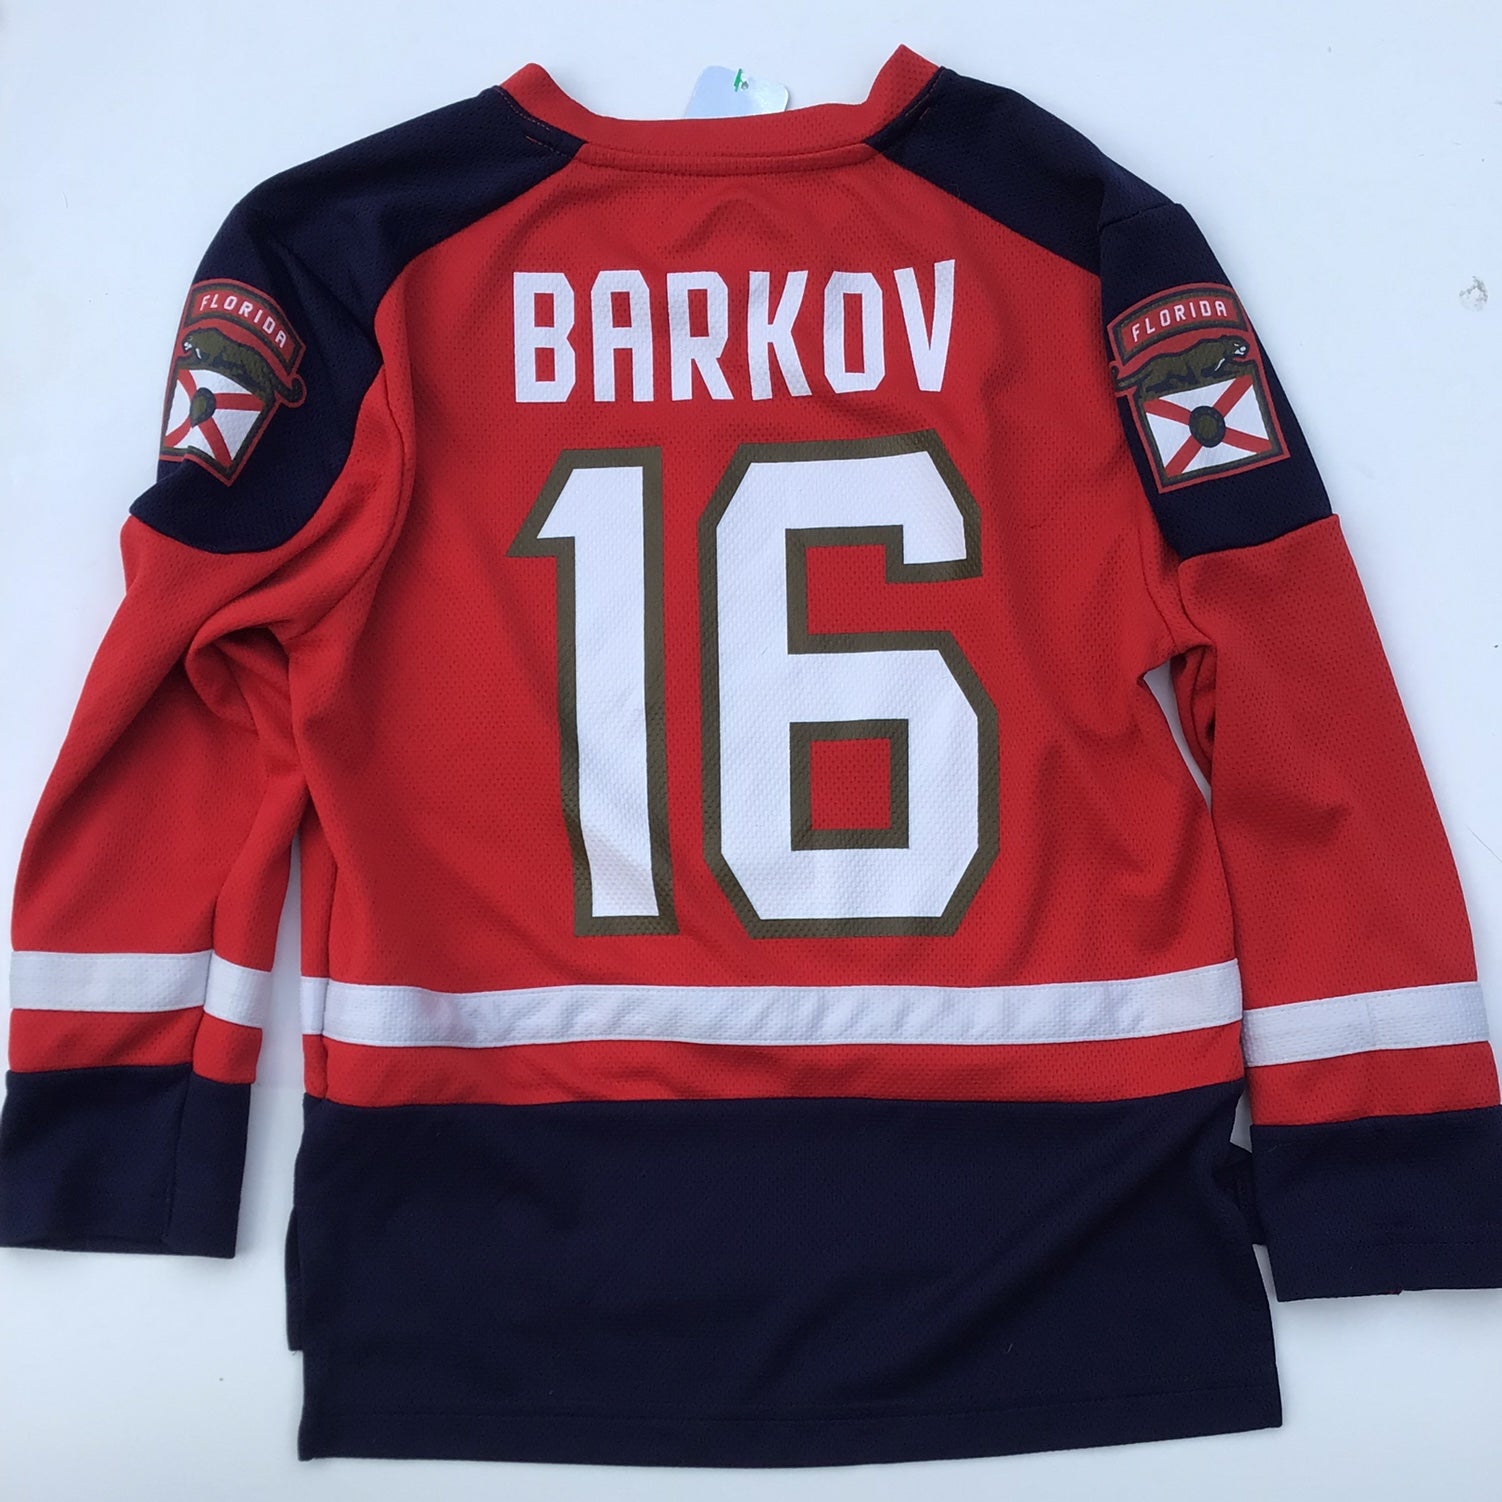 Youth M size Alexandr Barkov Florida Panthers jersey